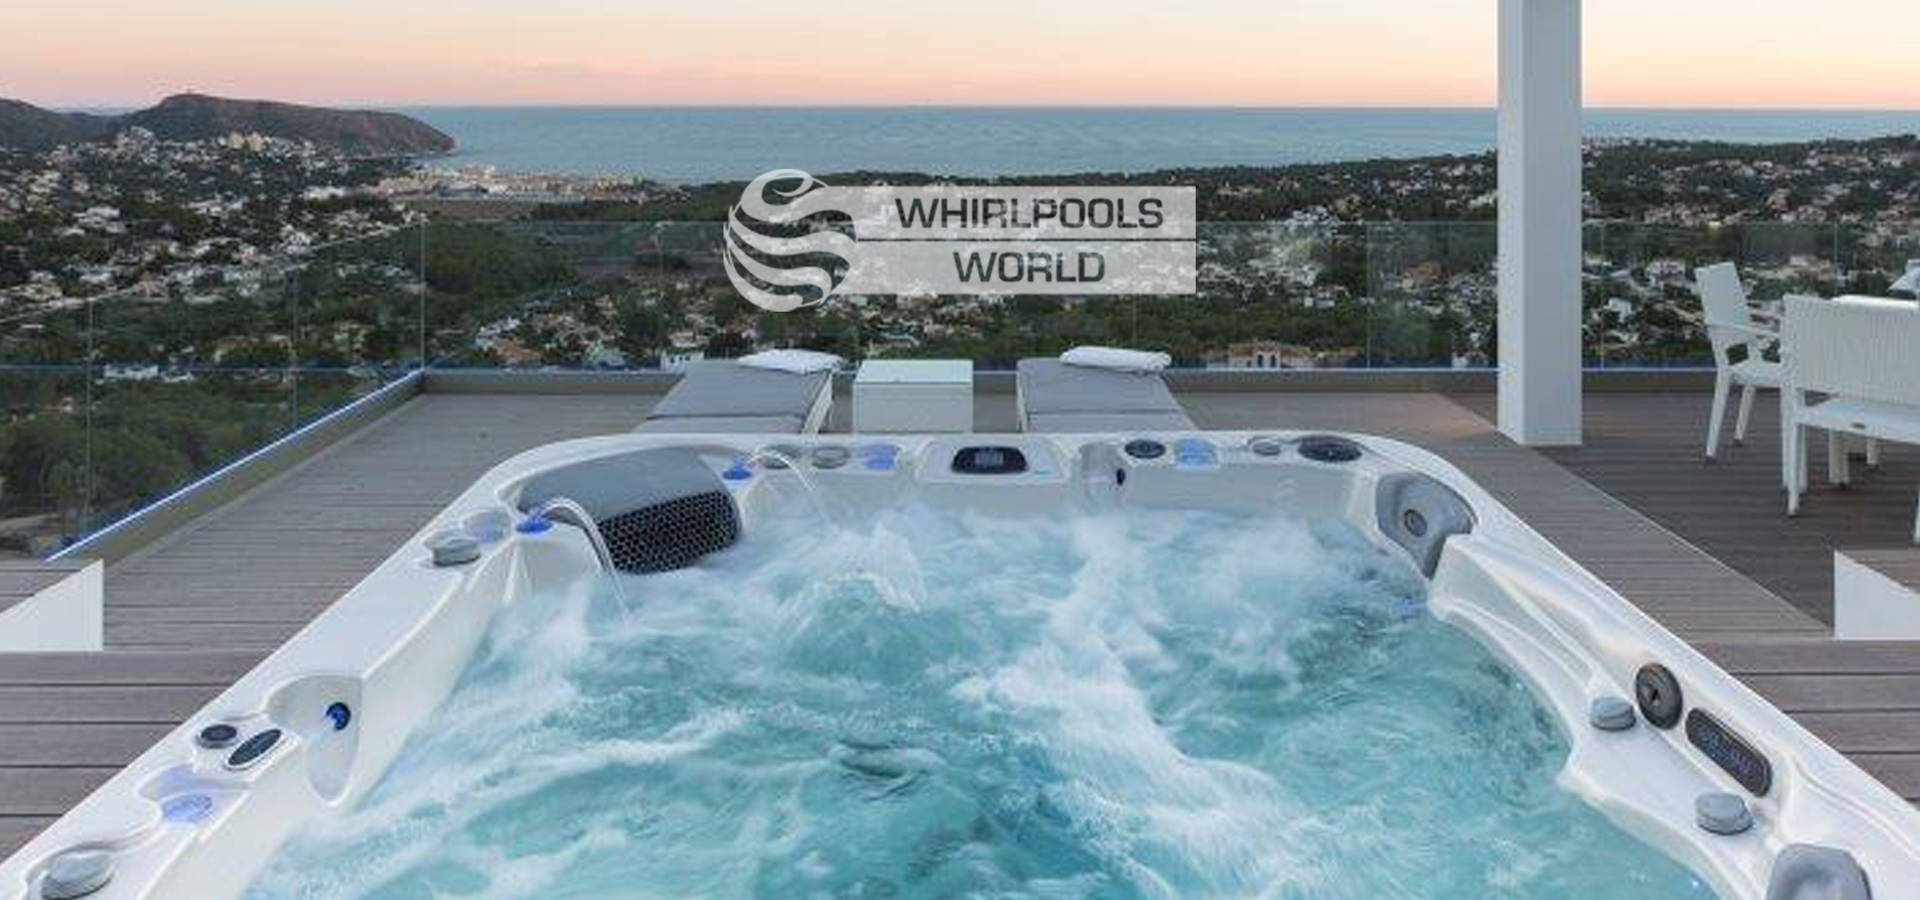 Whirlpools World